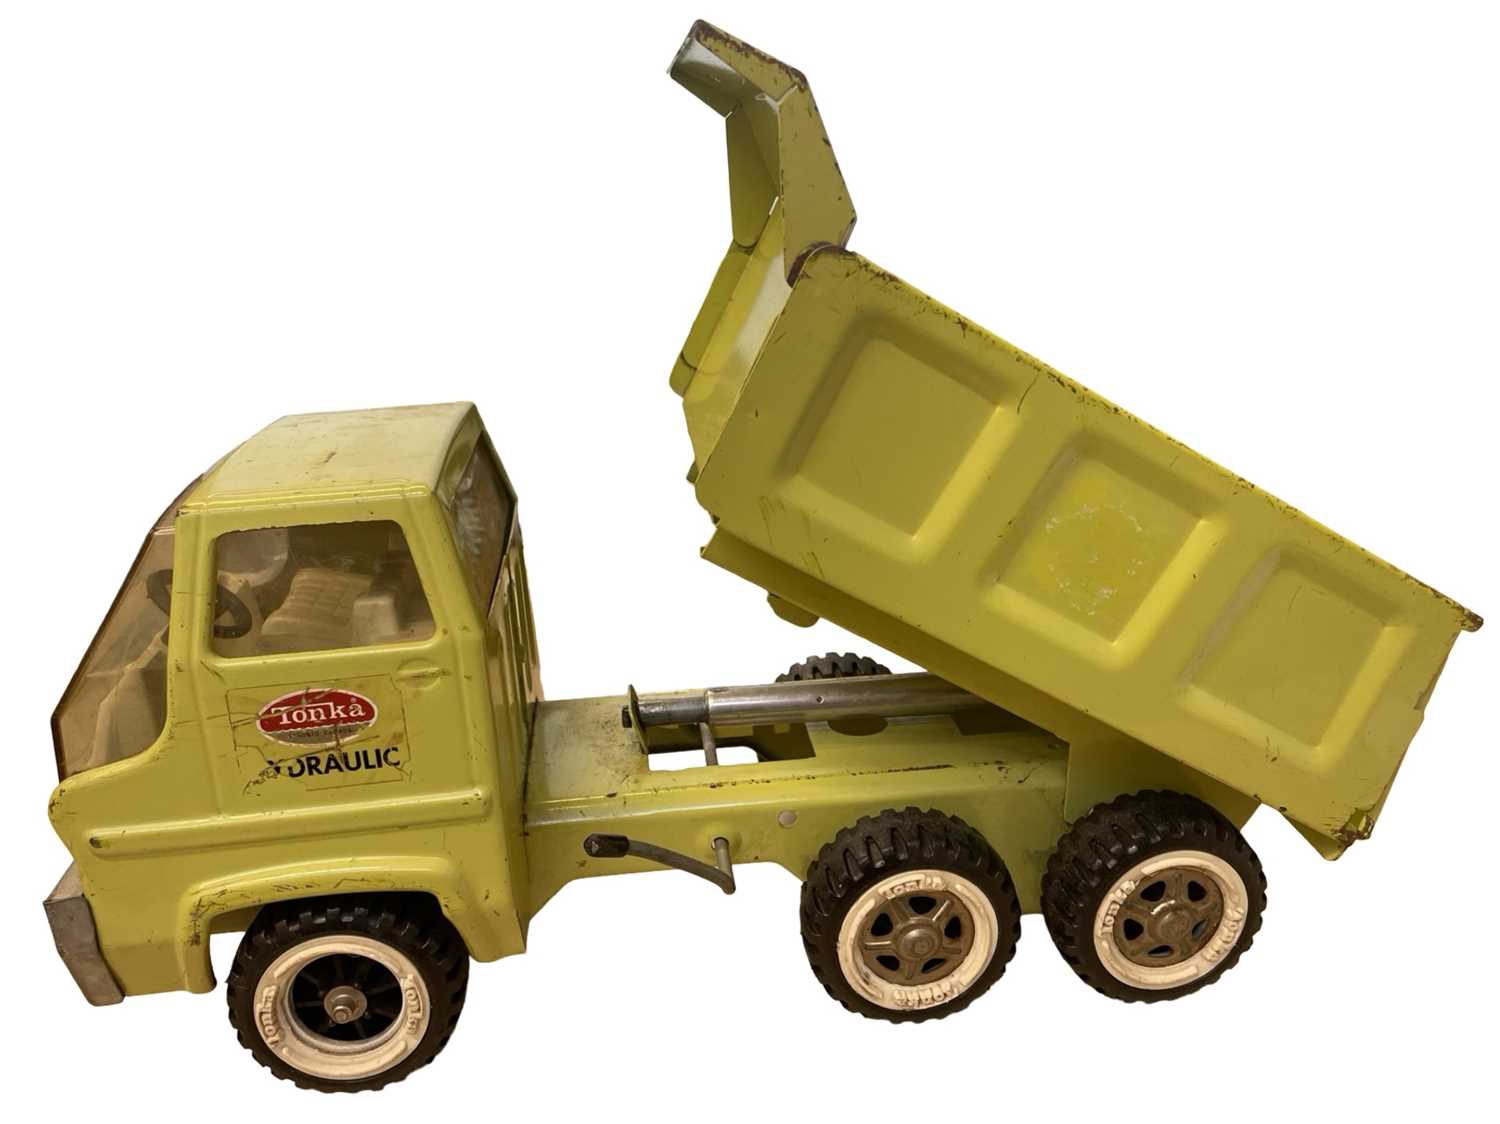 A pressed steel Tonka Hydraulic dump truck